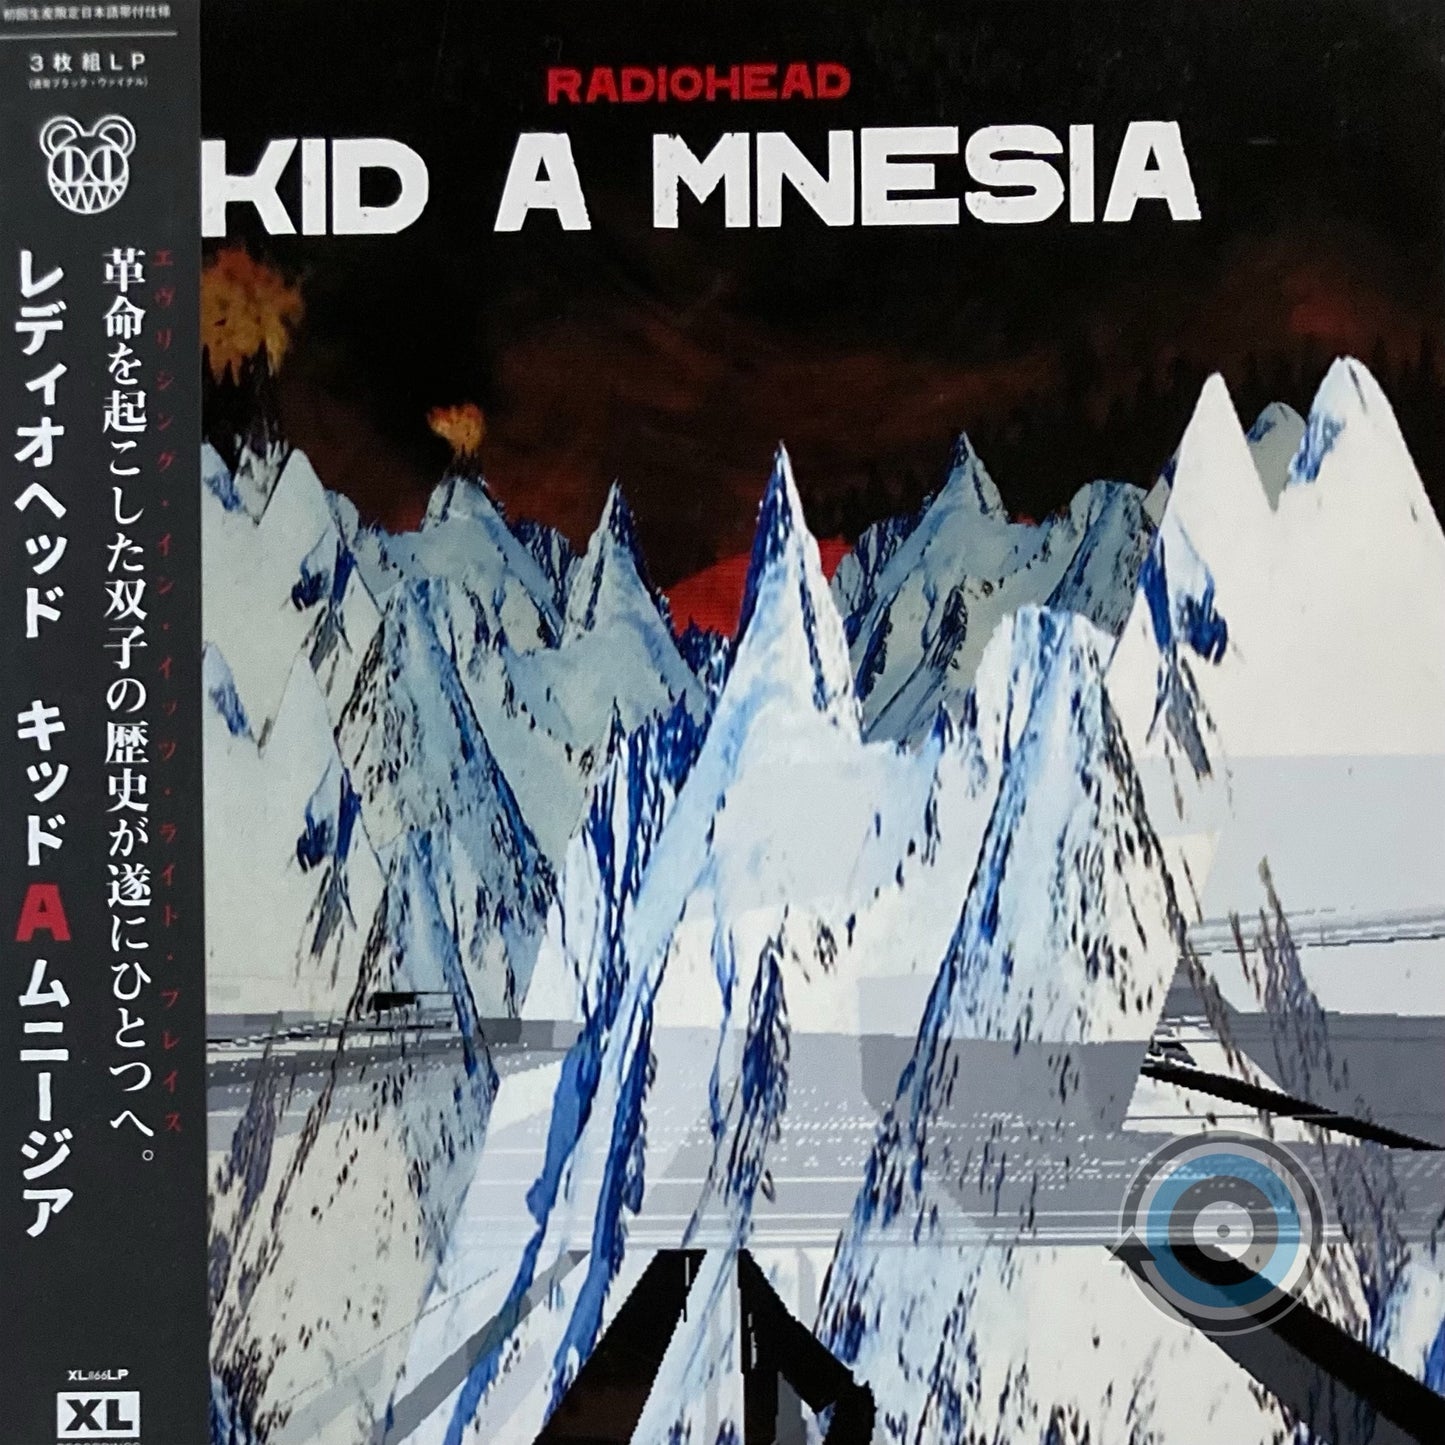 Radiohead – Kid A Mnesia 3-LP (Japan Pressing)